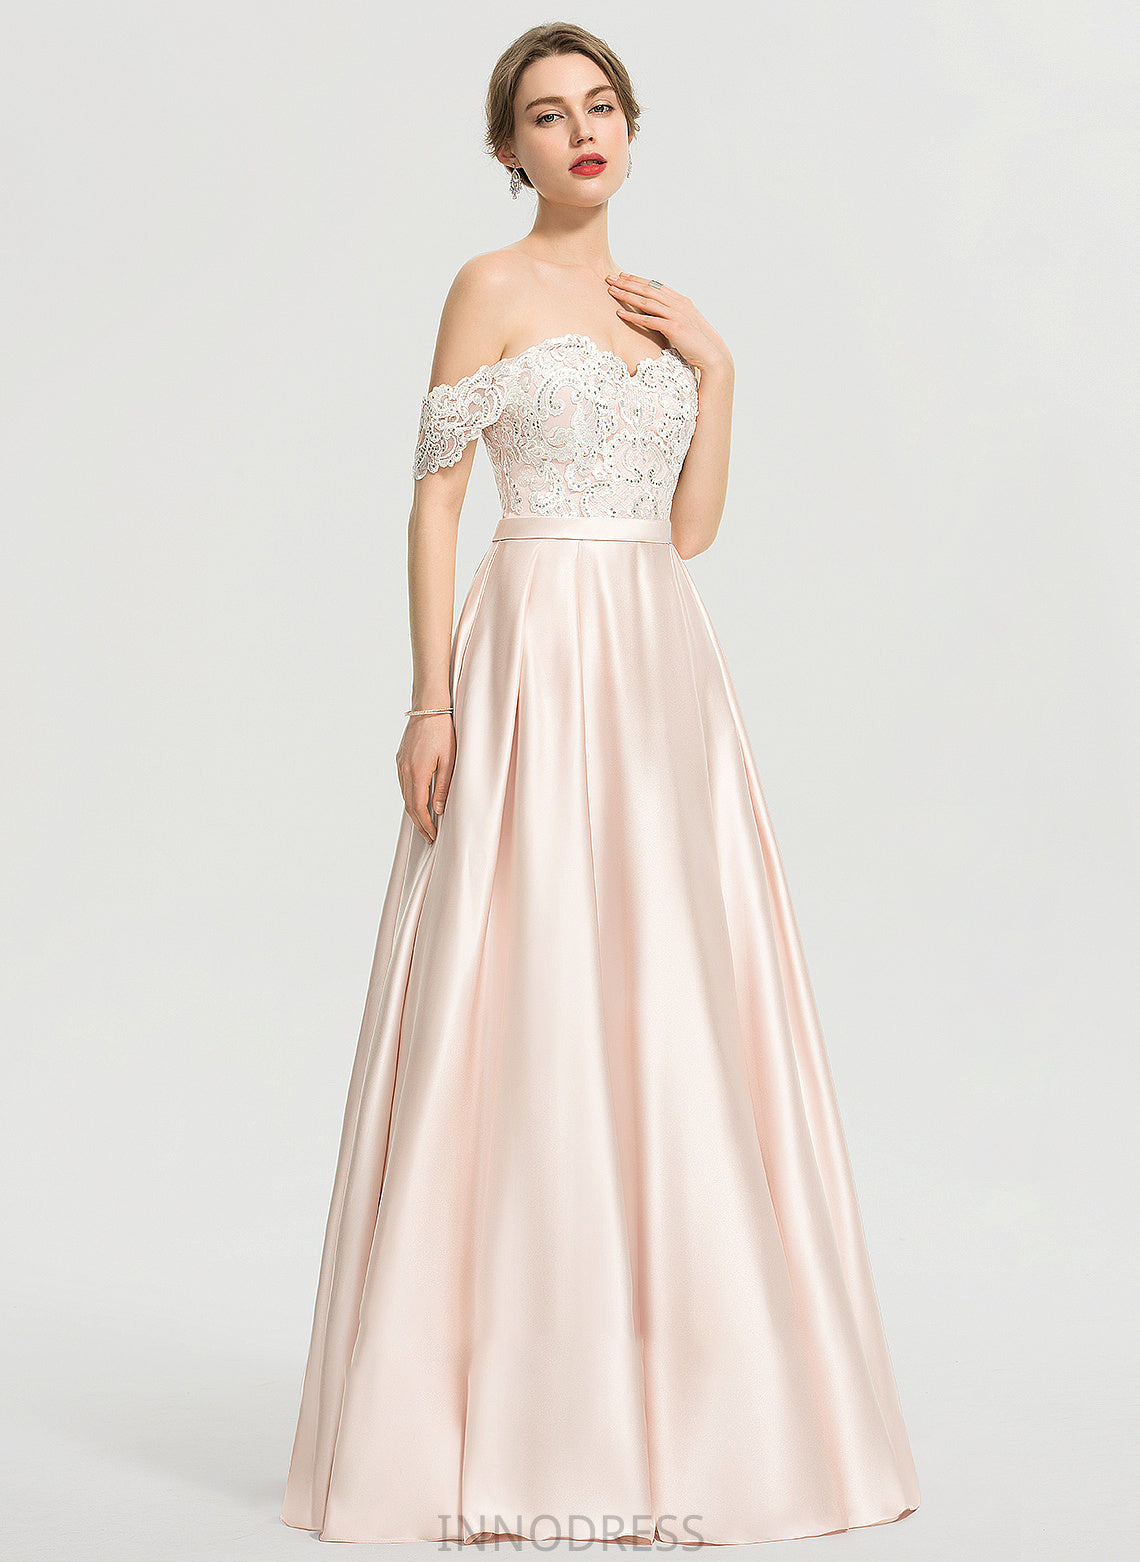 With Floor-Length Dress Ball-Gown/Princess Off-the-Shoulder Selah Wedding Dresses Wedding Sequins Satin